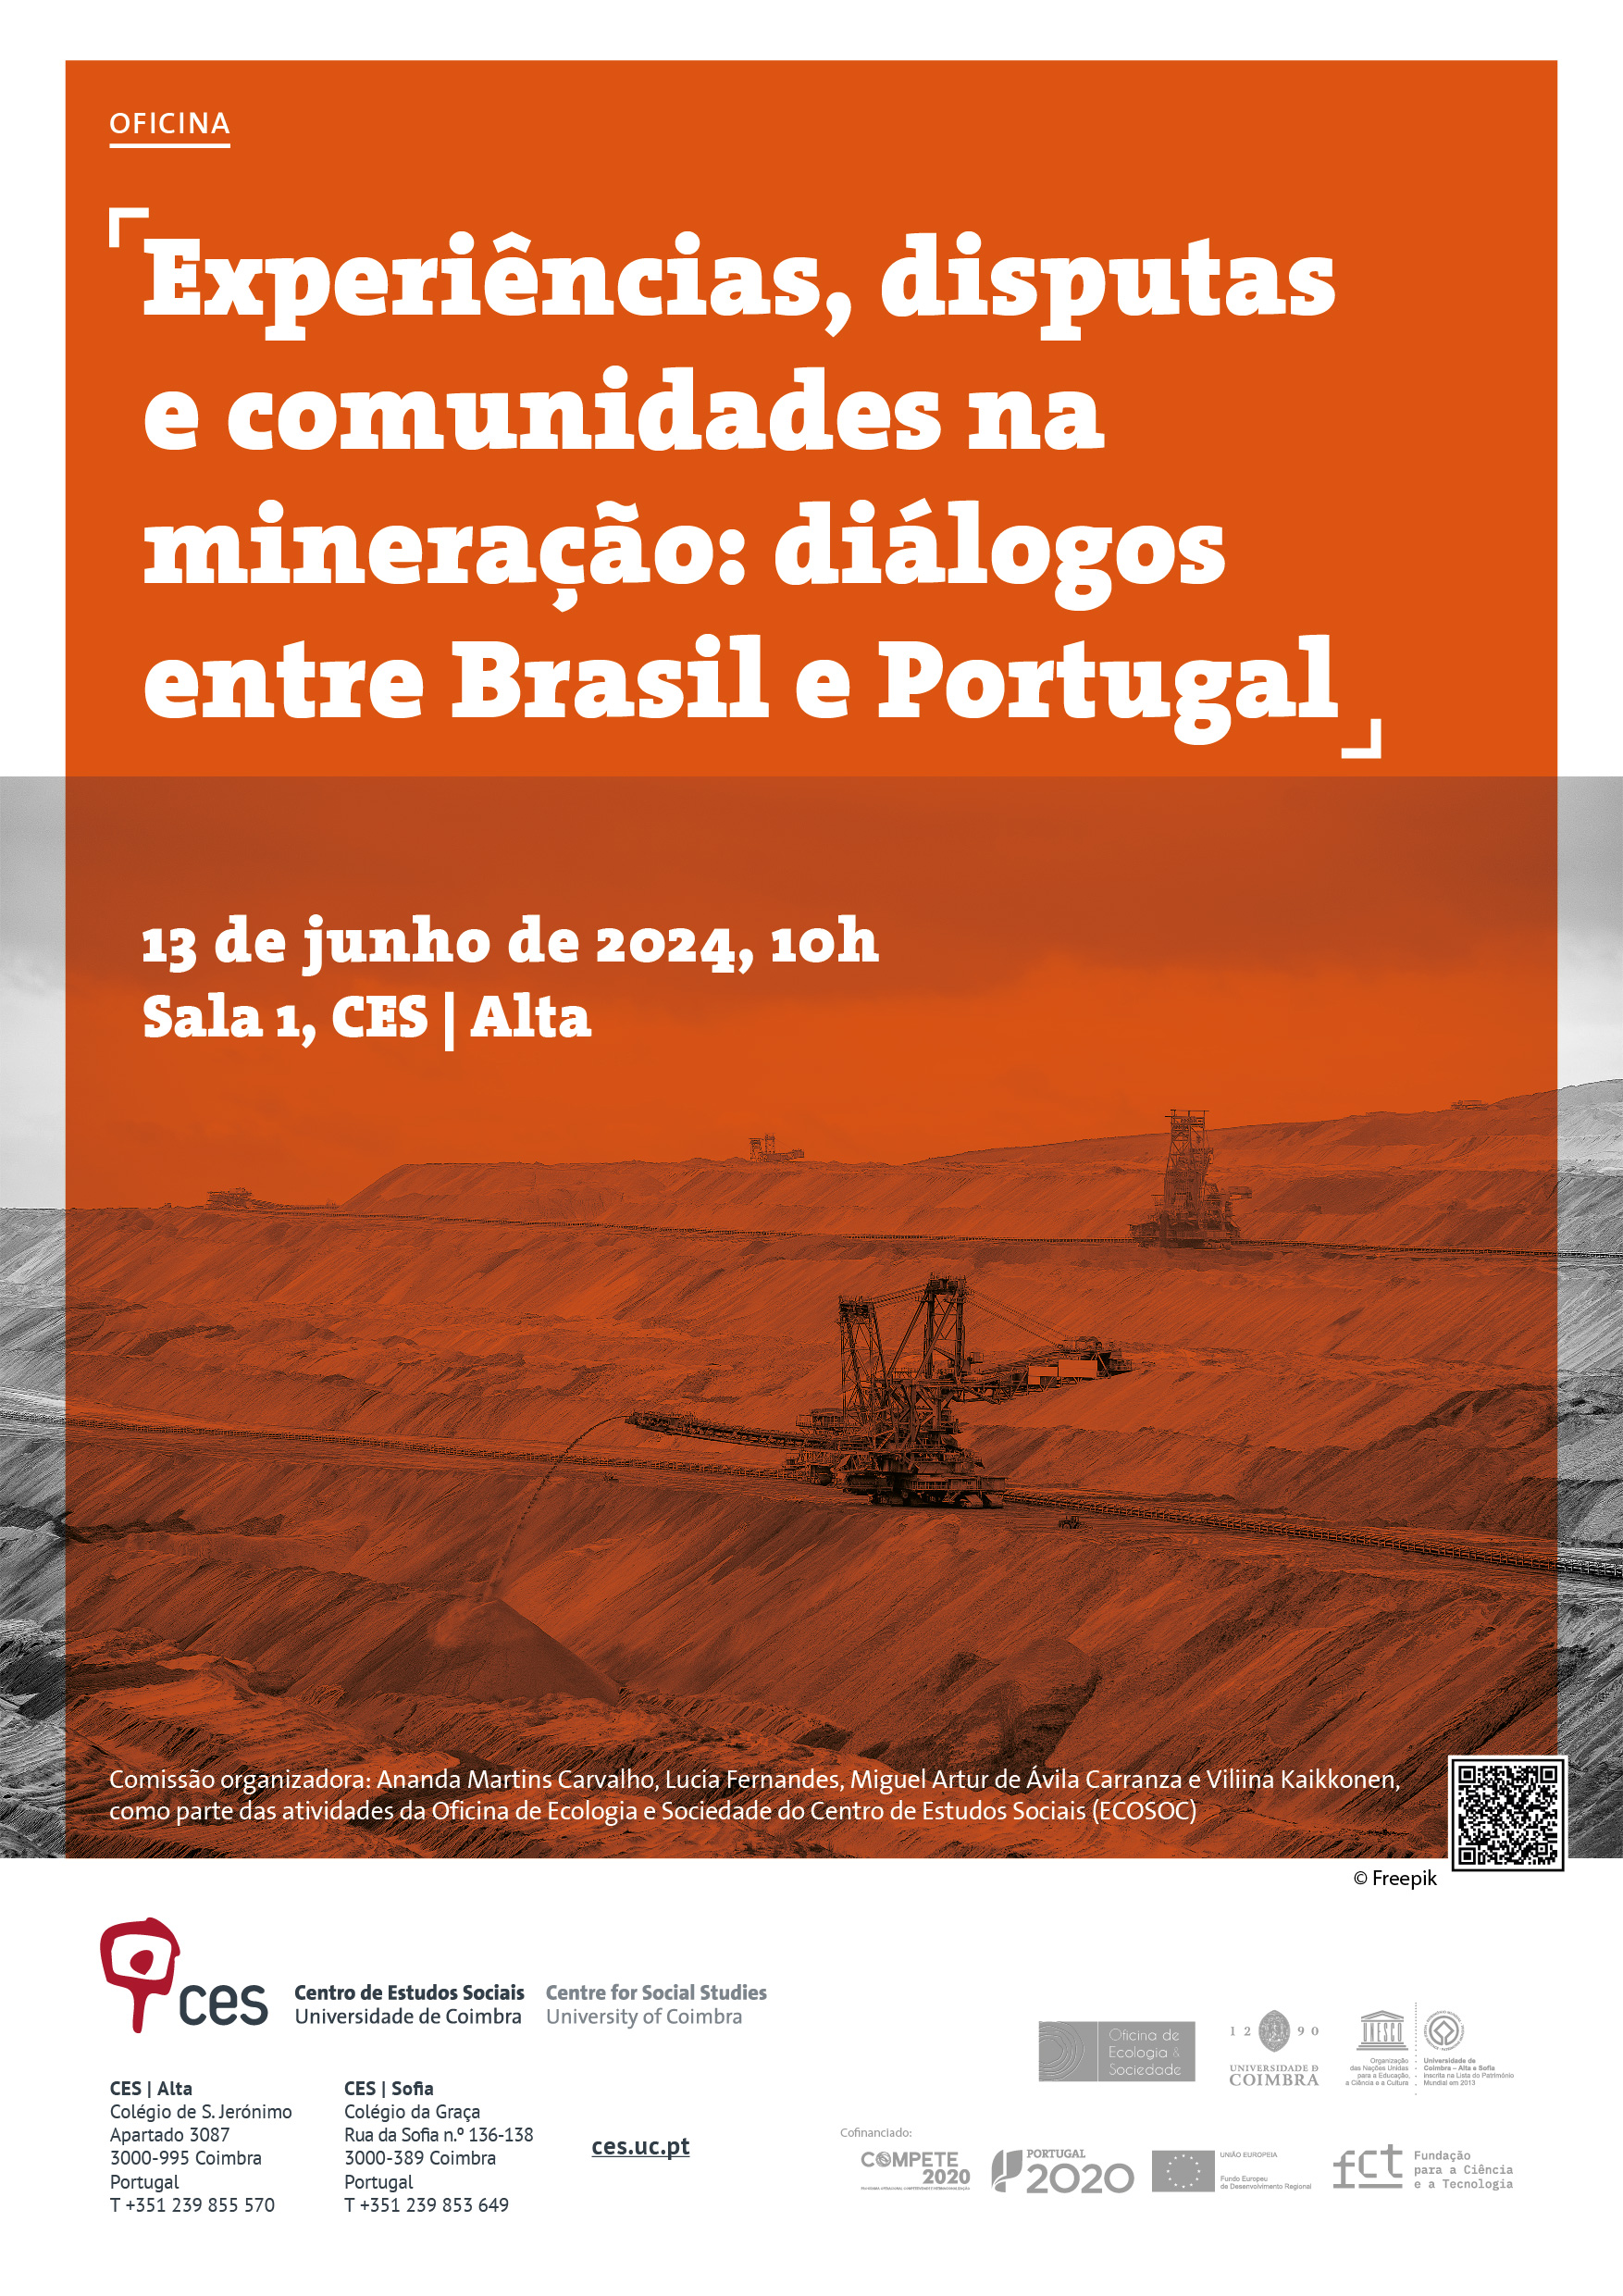 Experiências, disputas e comunidades na mineração: diálogos entre Brasil e Portugal <span id="edit_45945"><script>$(function() { $('#edit_45945').load( "/myces/user/editobj.php?tipo=evento&id=45945" ); });</script></span>